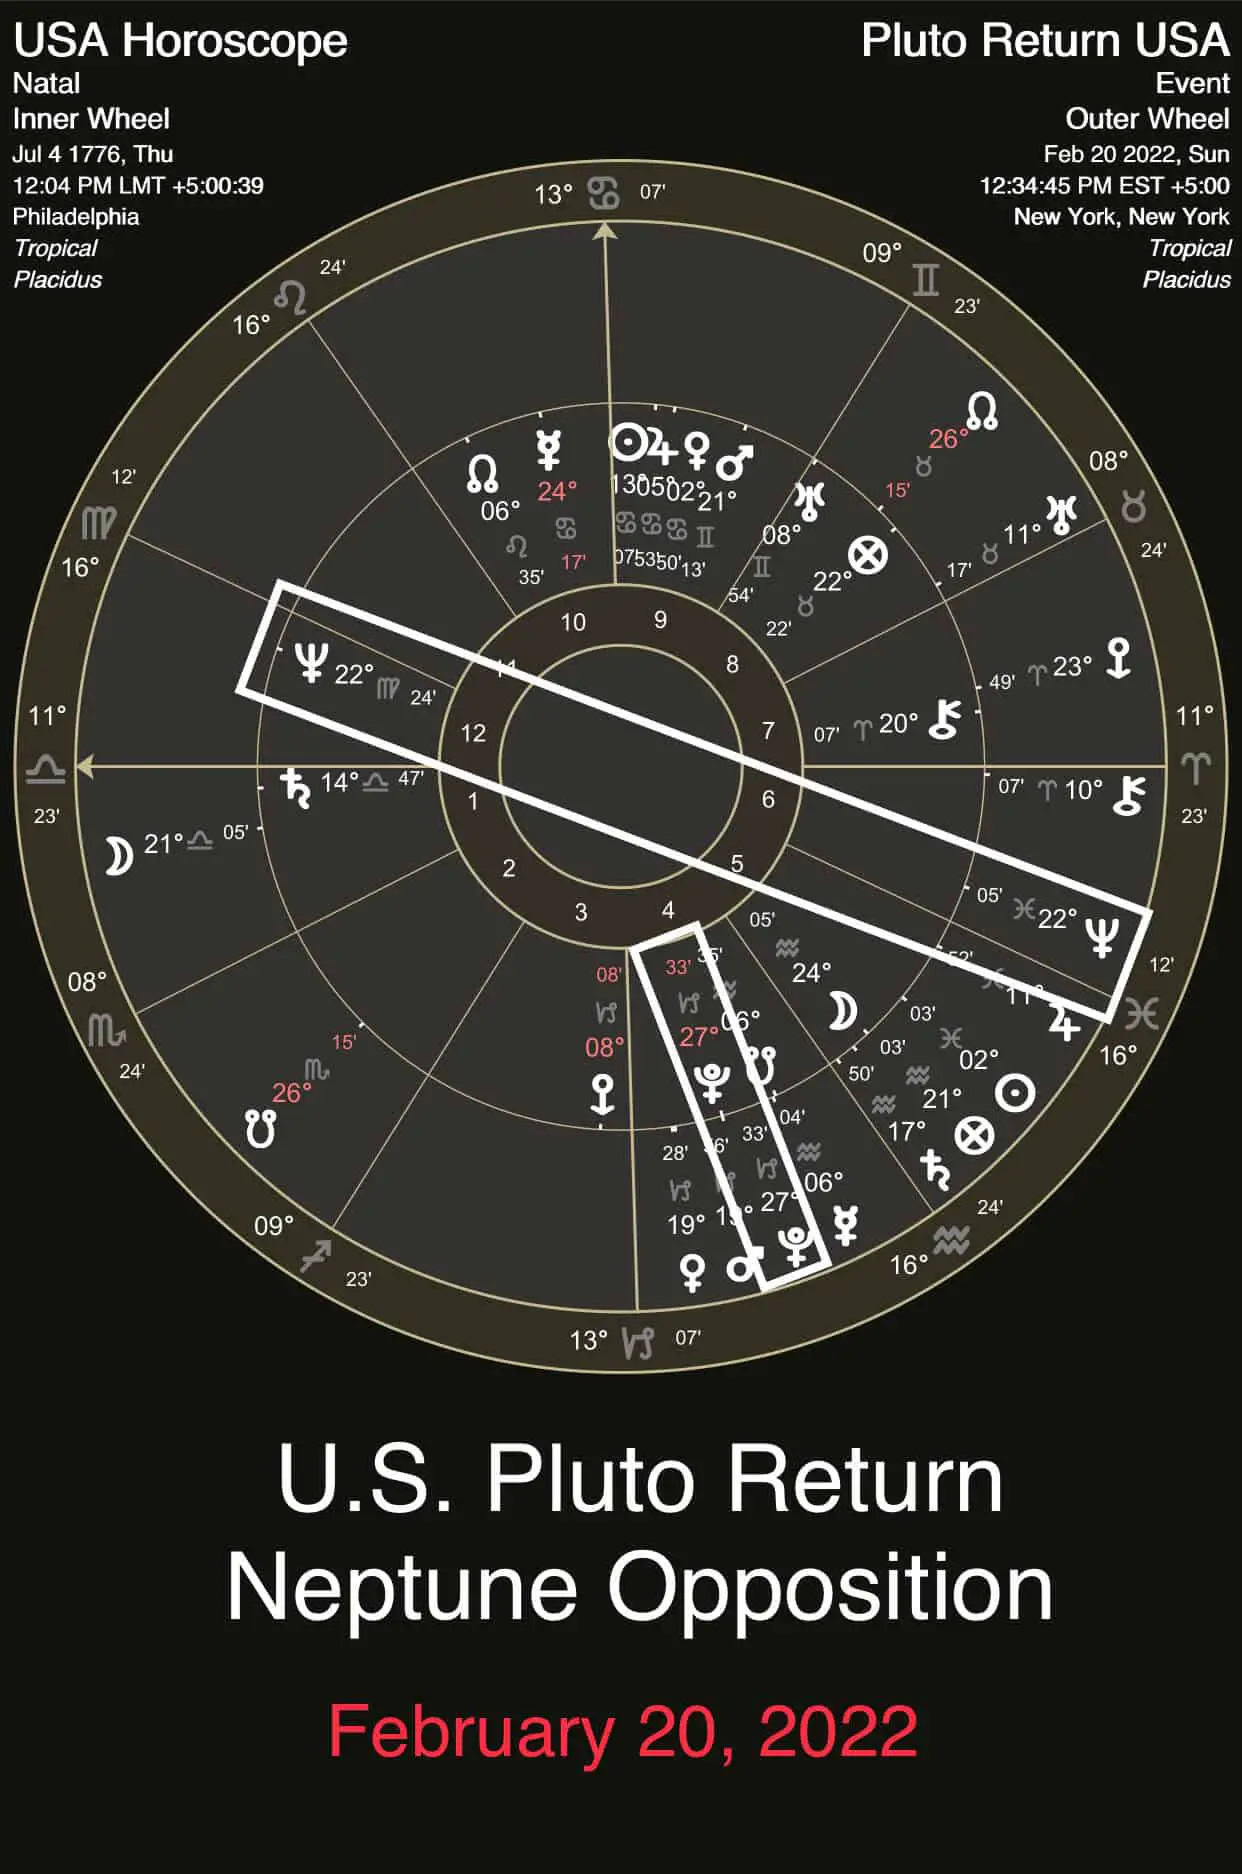 1. Pluto Return In 2023